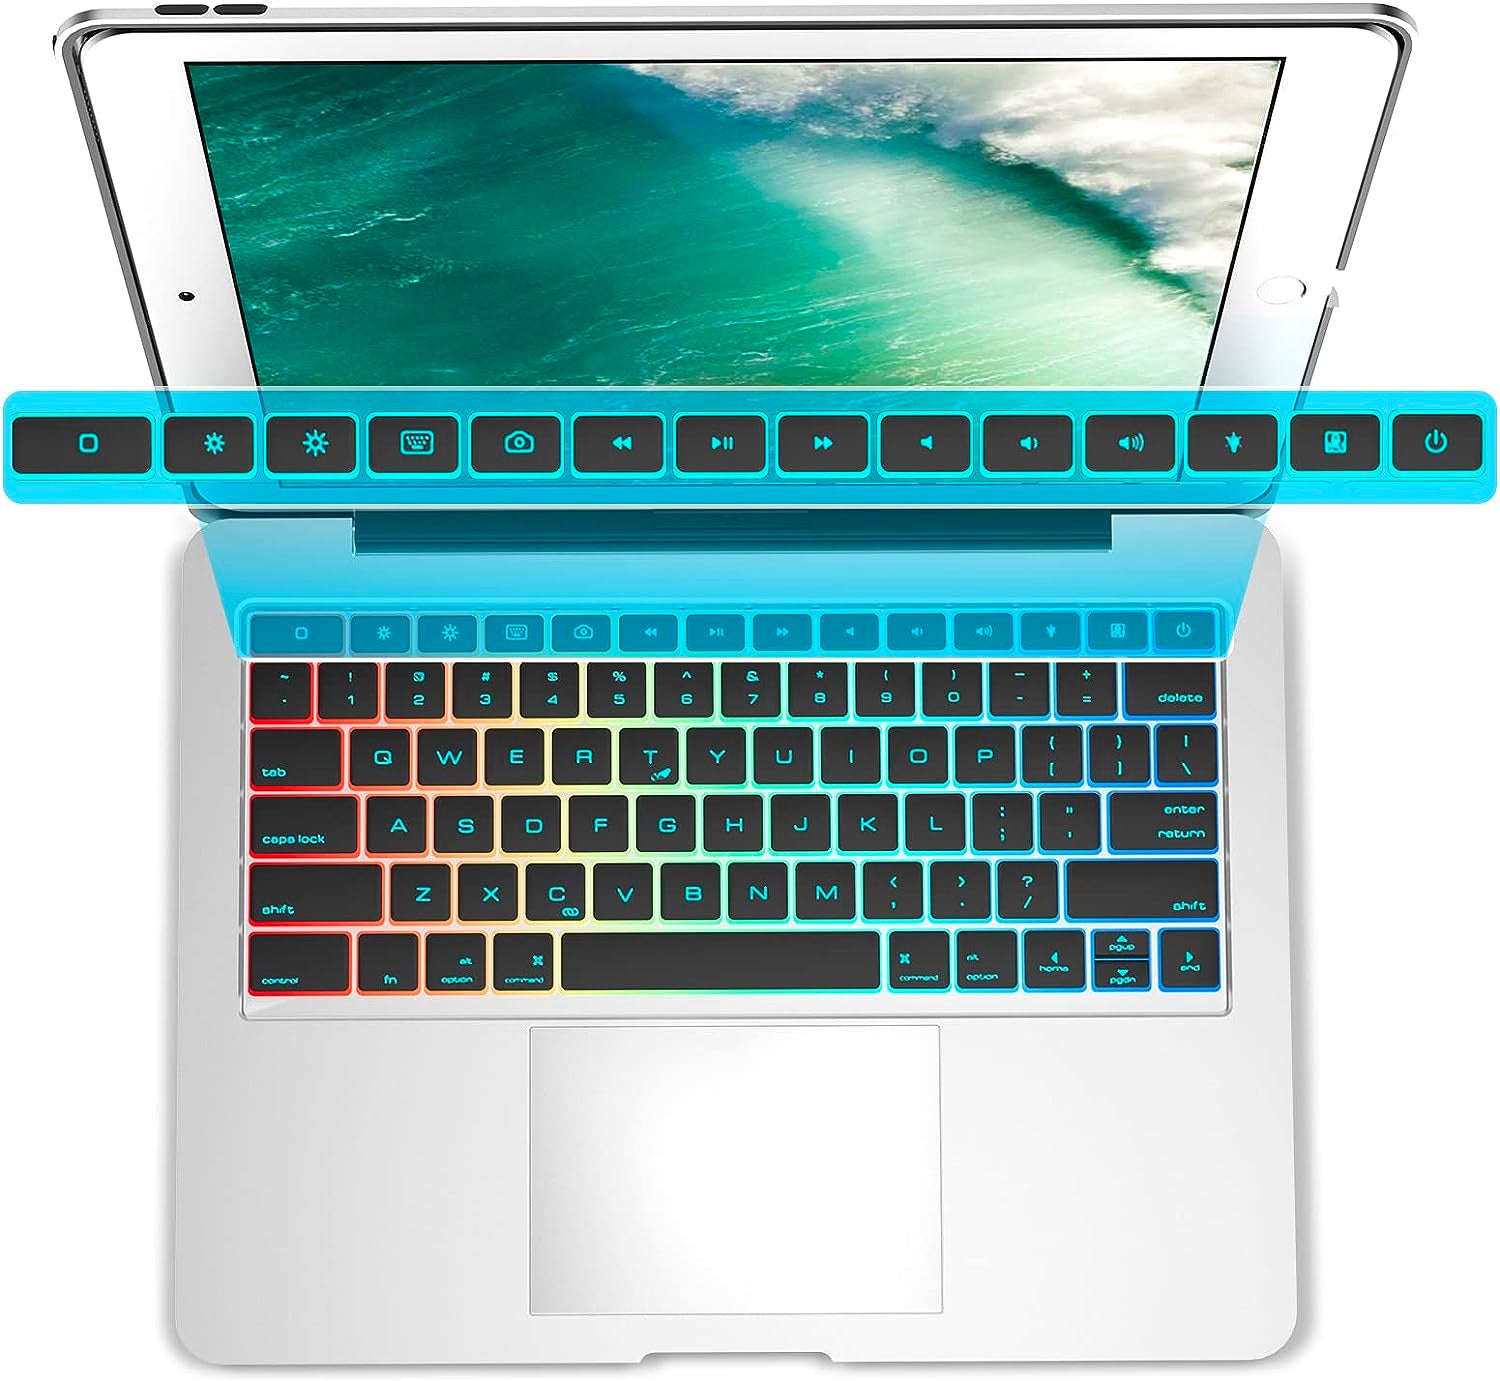 Keyboard Case for 12.9" iPad Pro (1-2 Gen) - Gold & Cherry